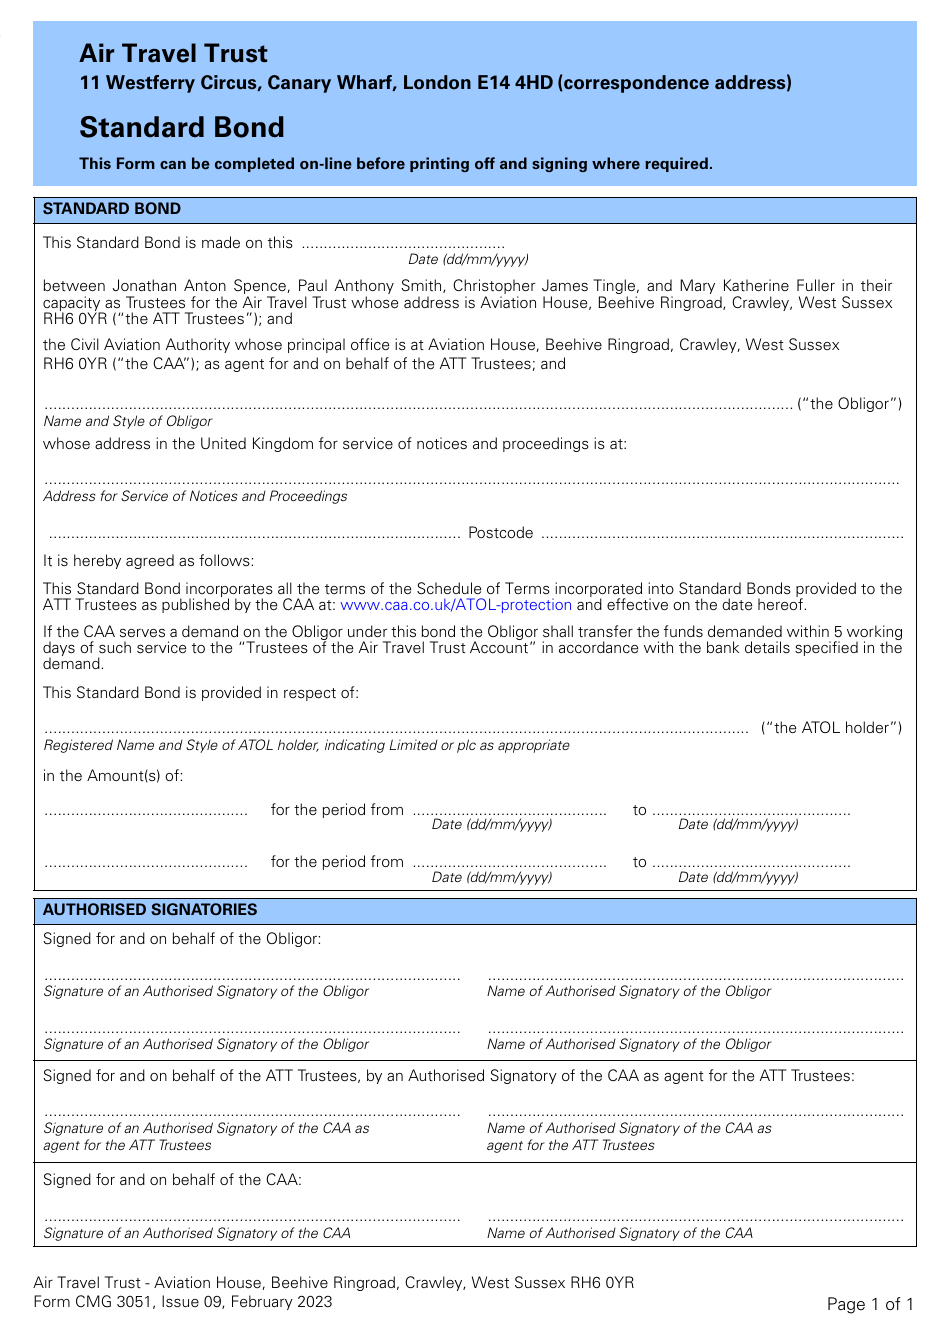 Form CMG3051 Standard Bond - United Kingdom, Page 1